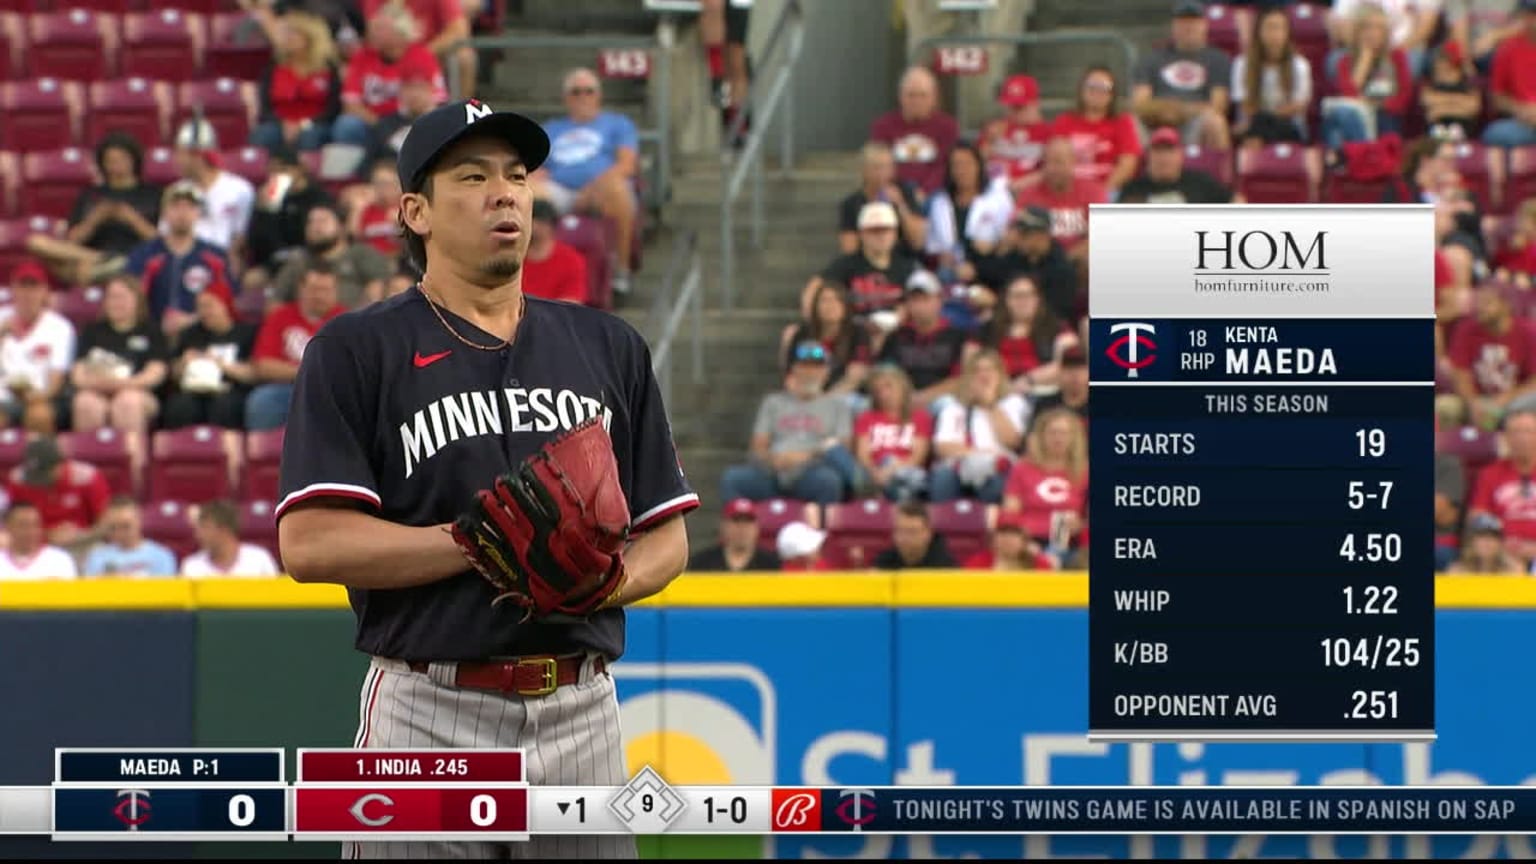 Minnesota Twins - Kenta Maeda has 17 strikeouts across his